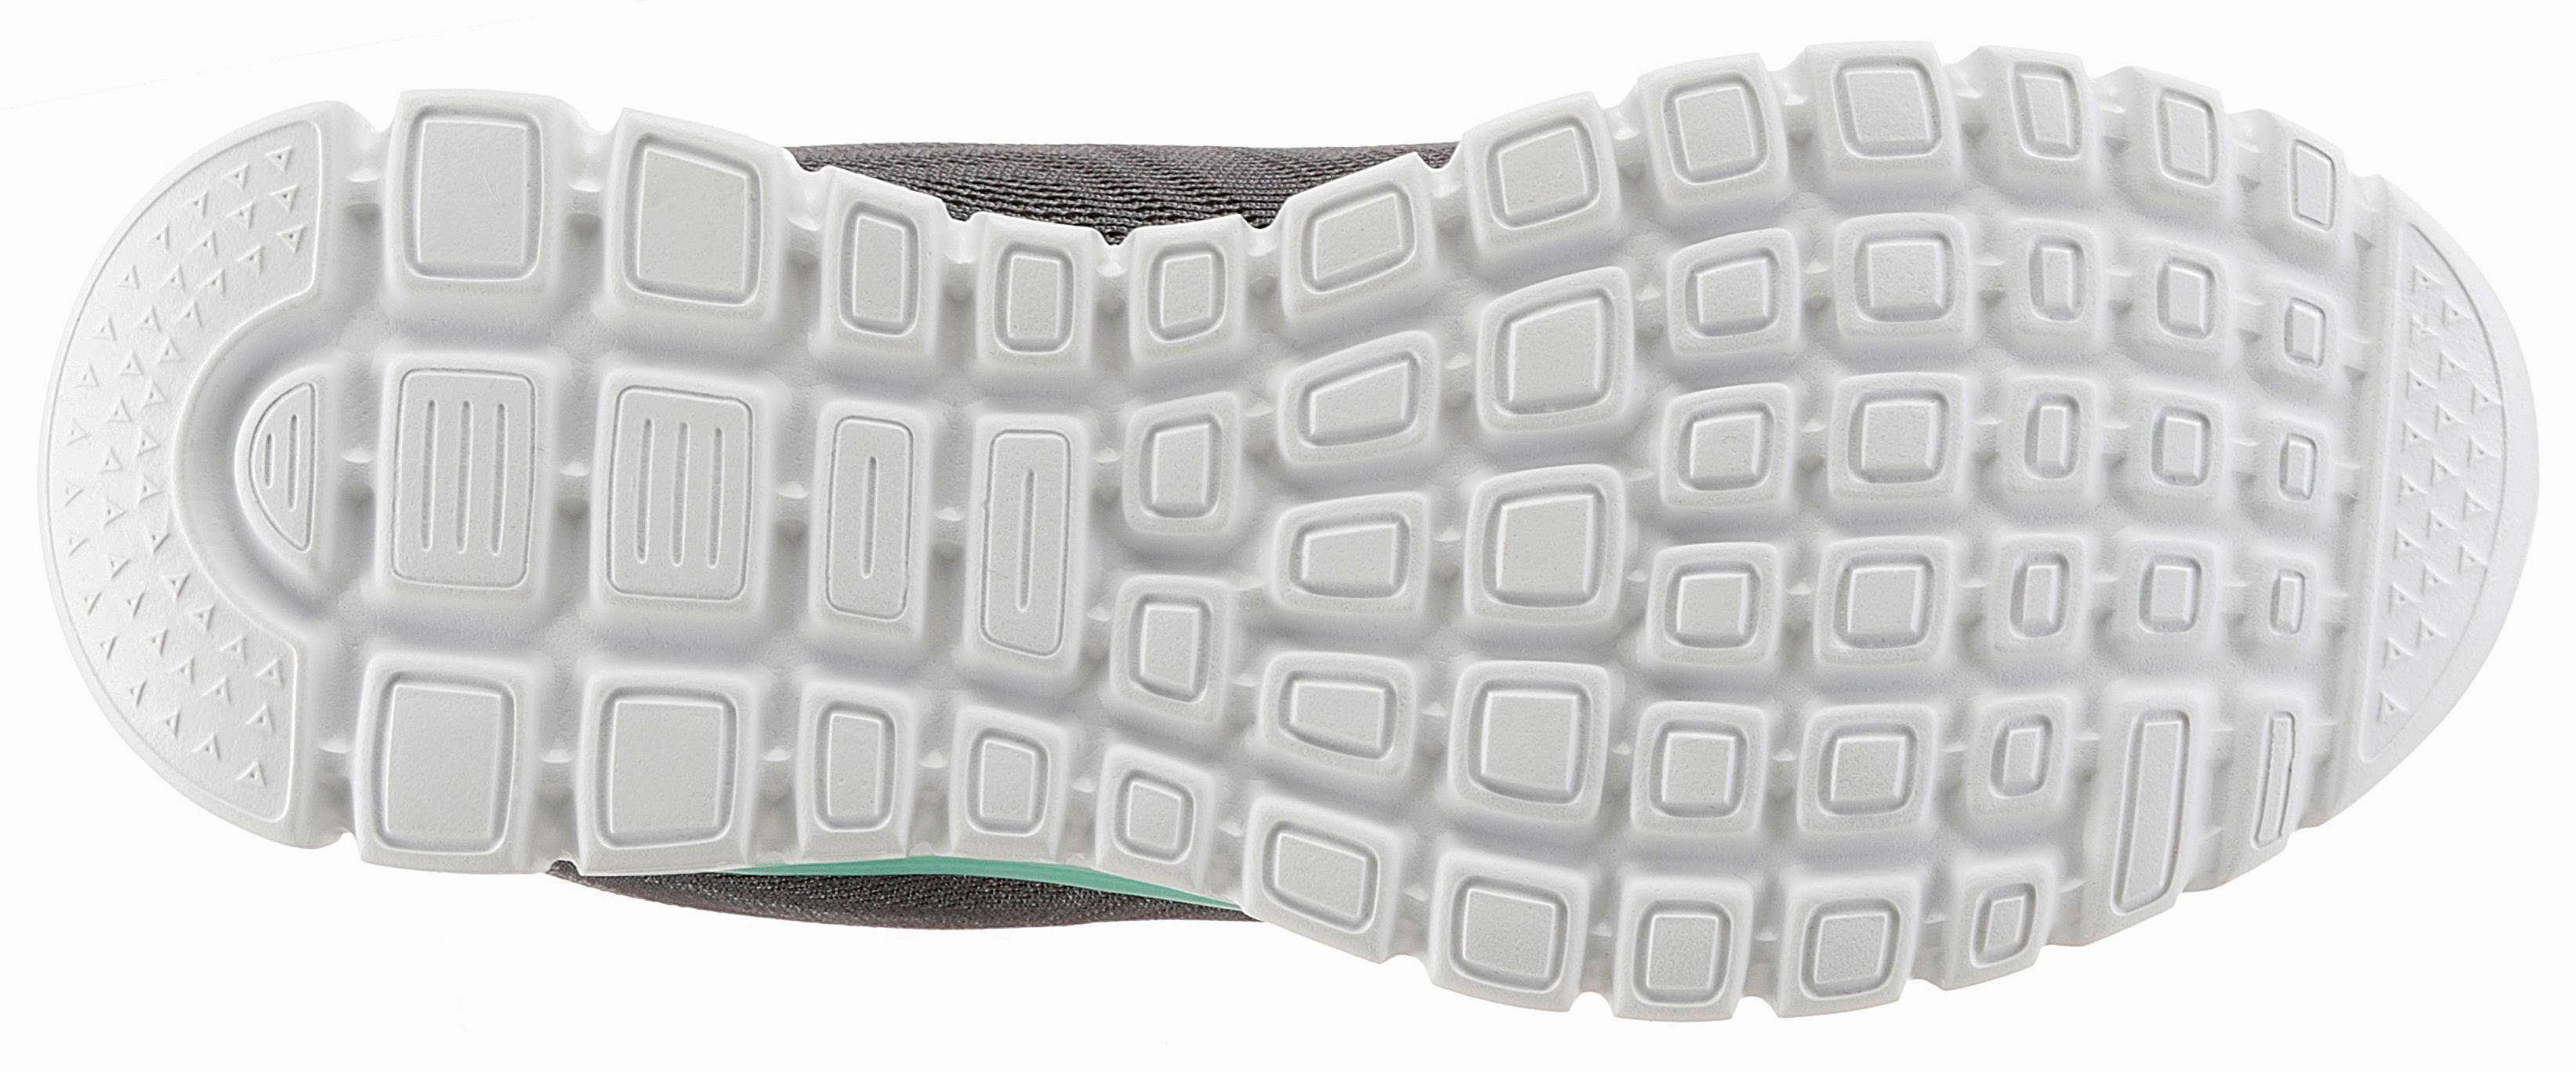 Get Foam - grau-mint Graceful Connected Sneaker Memory durch Dämpfung mit Skechers